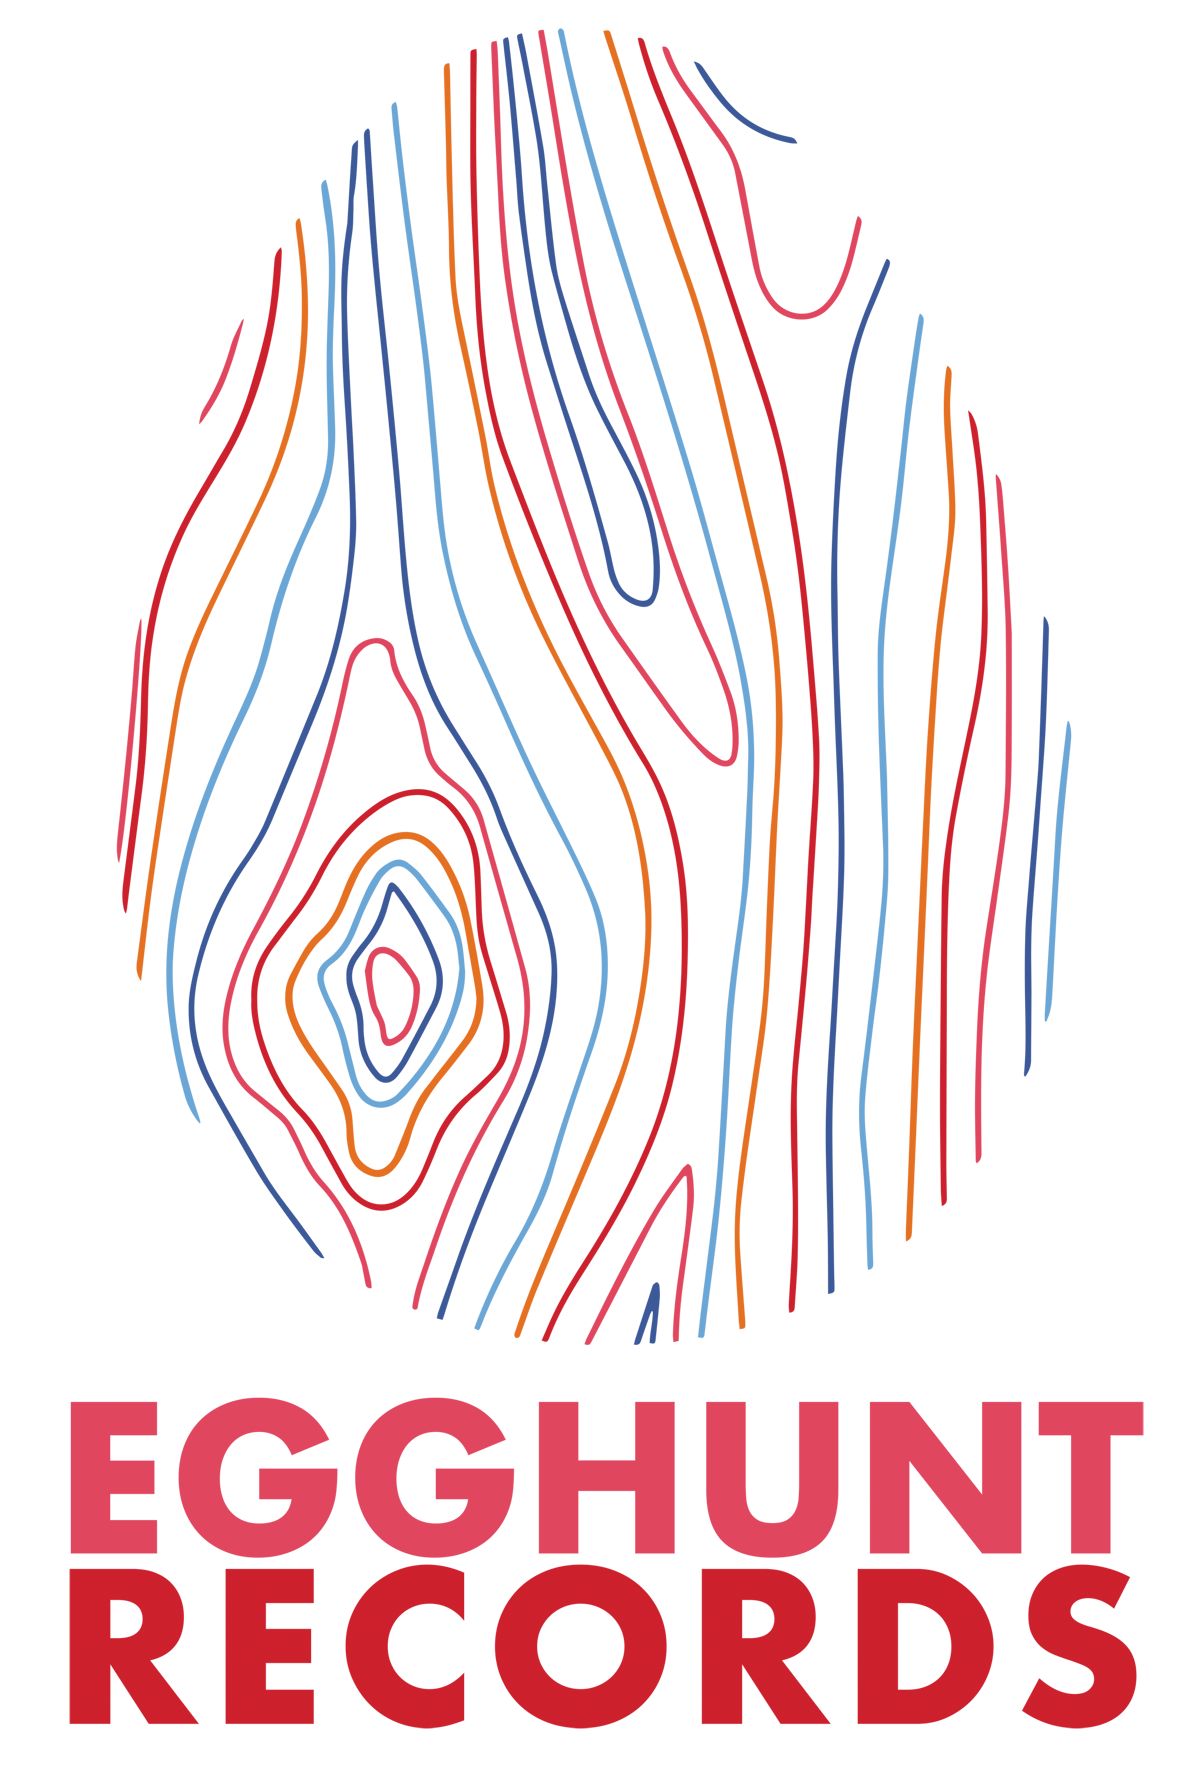 EggHunt Records